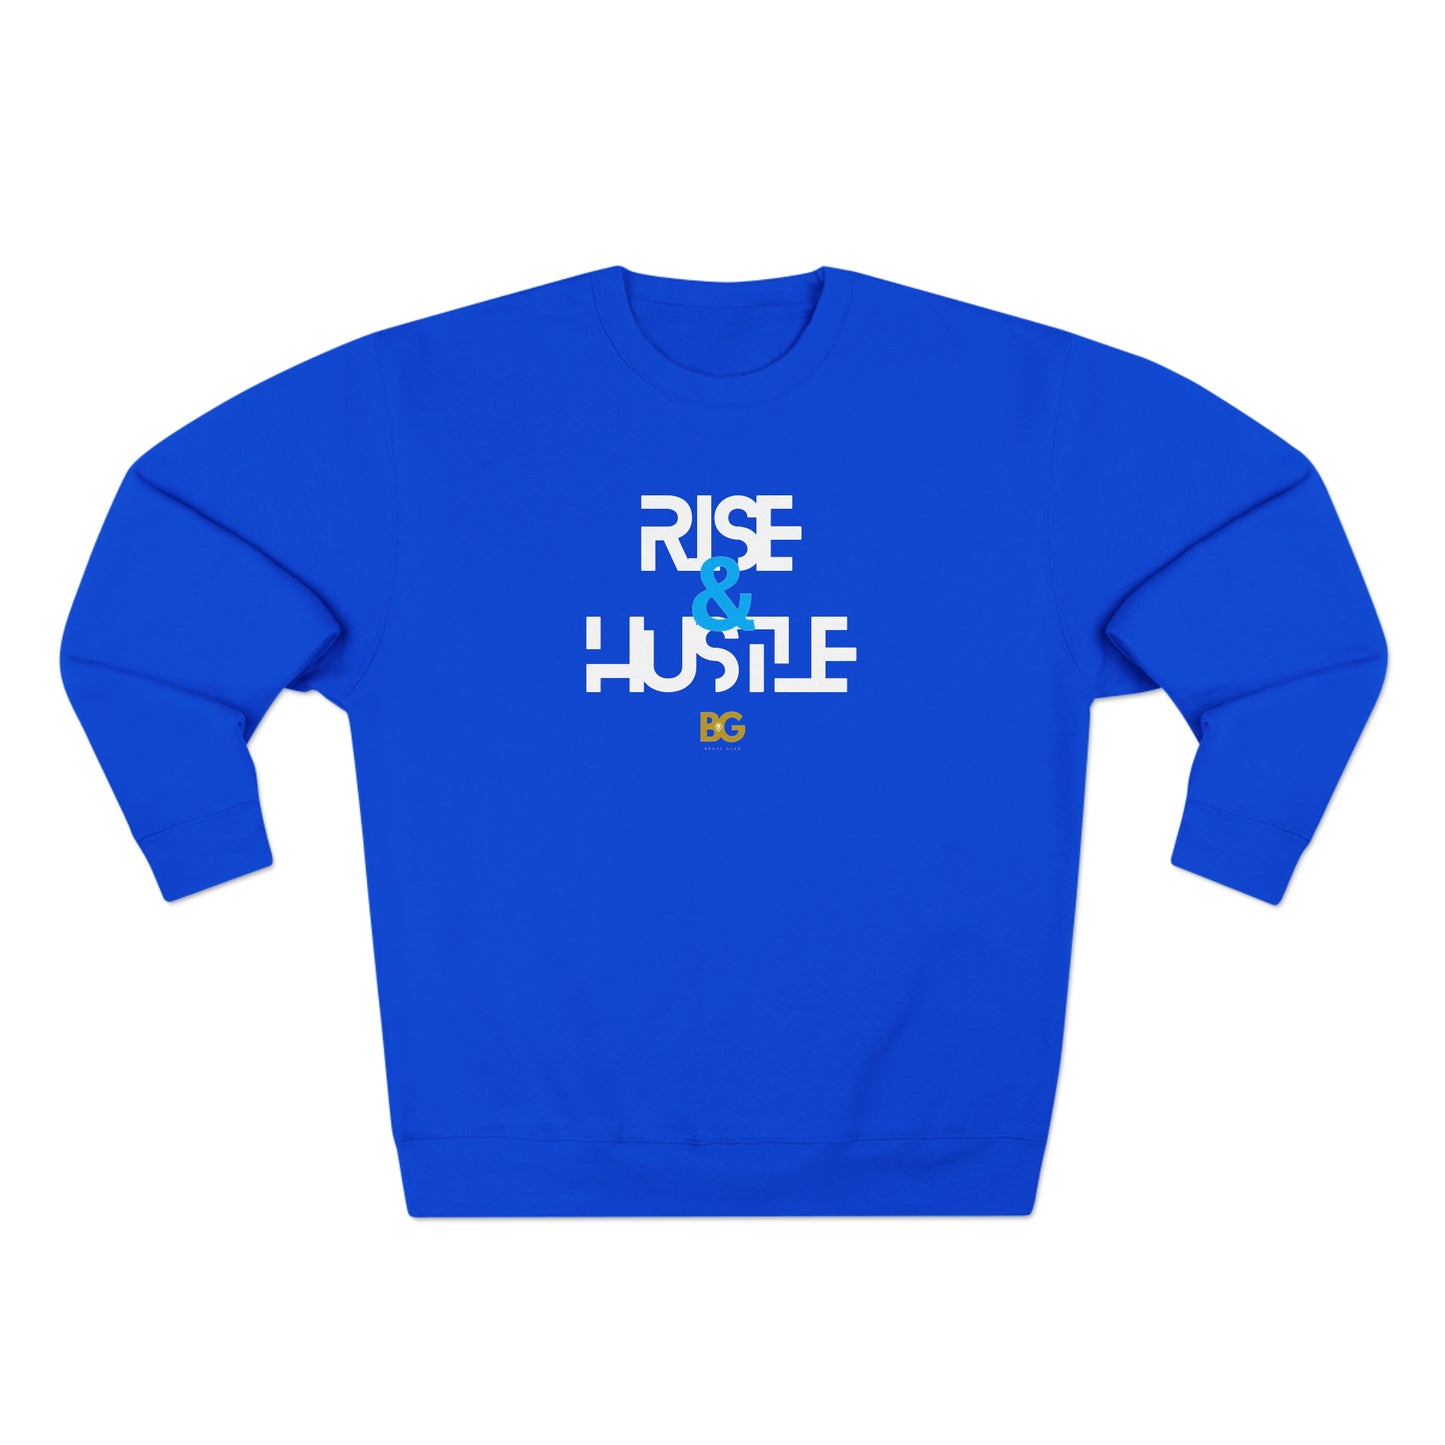 BG "Rise & Hustle" Premium Crewneck Sweatshirt